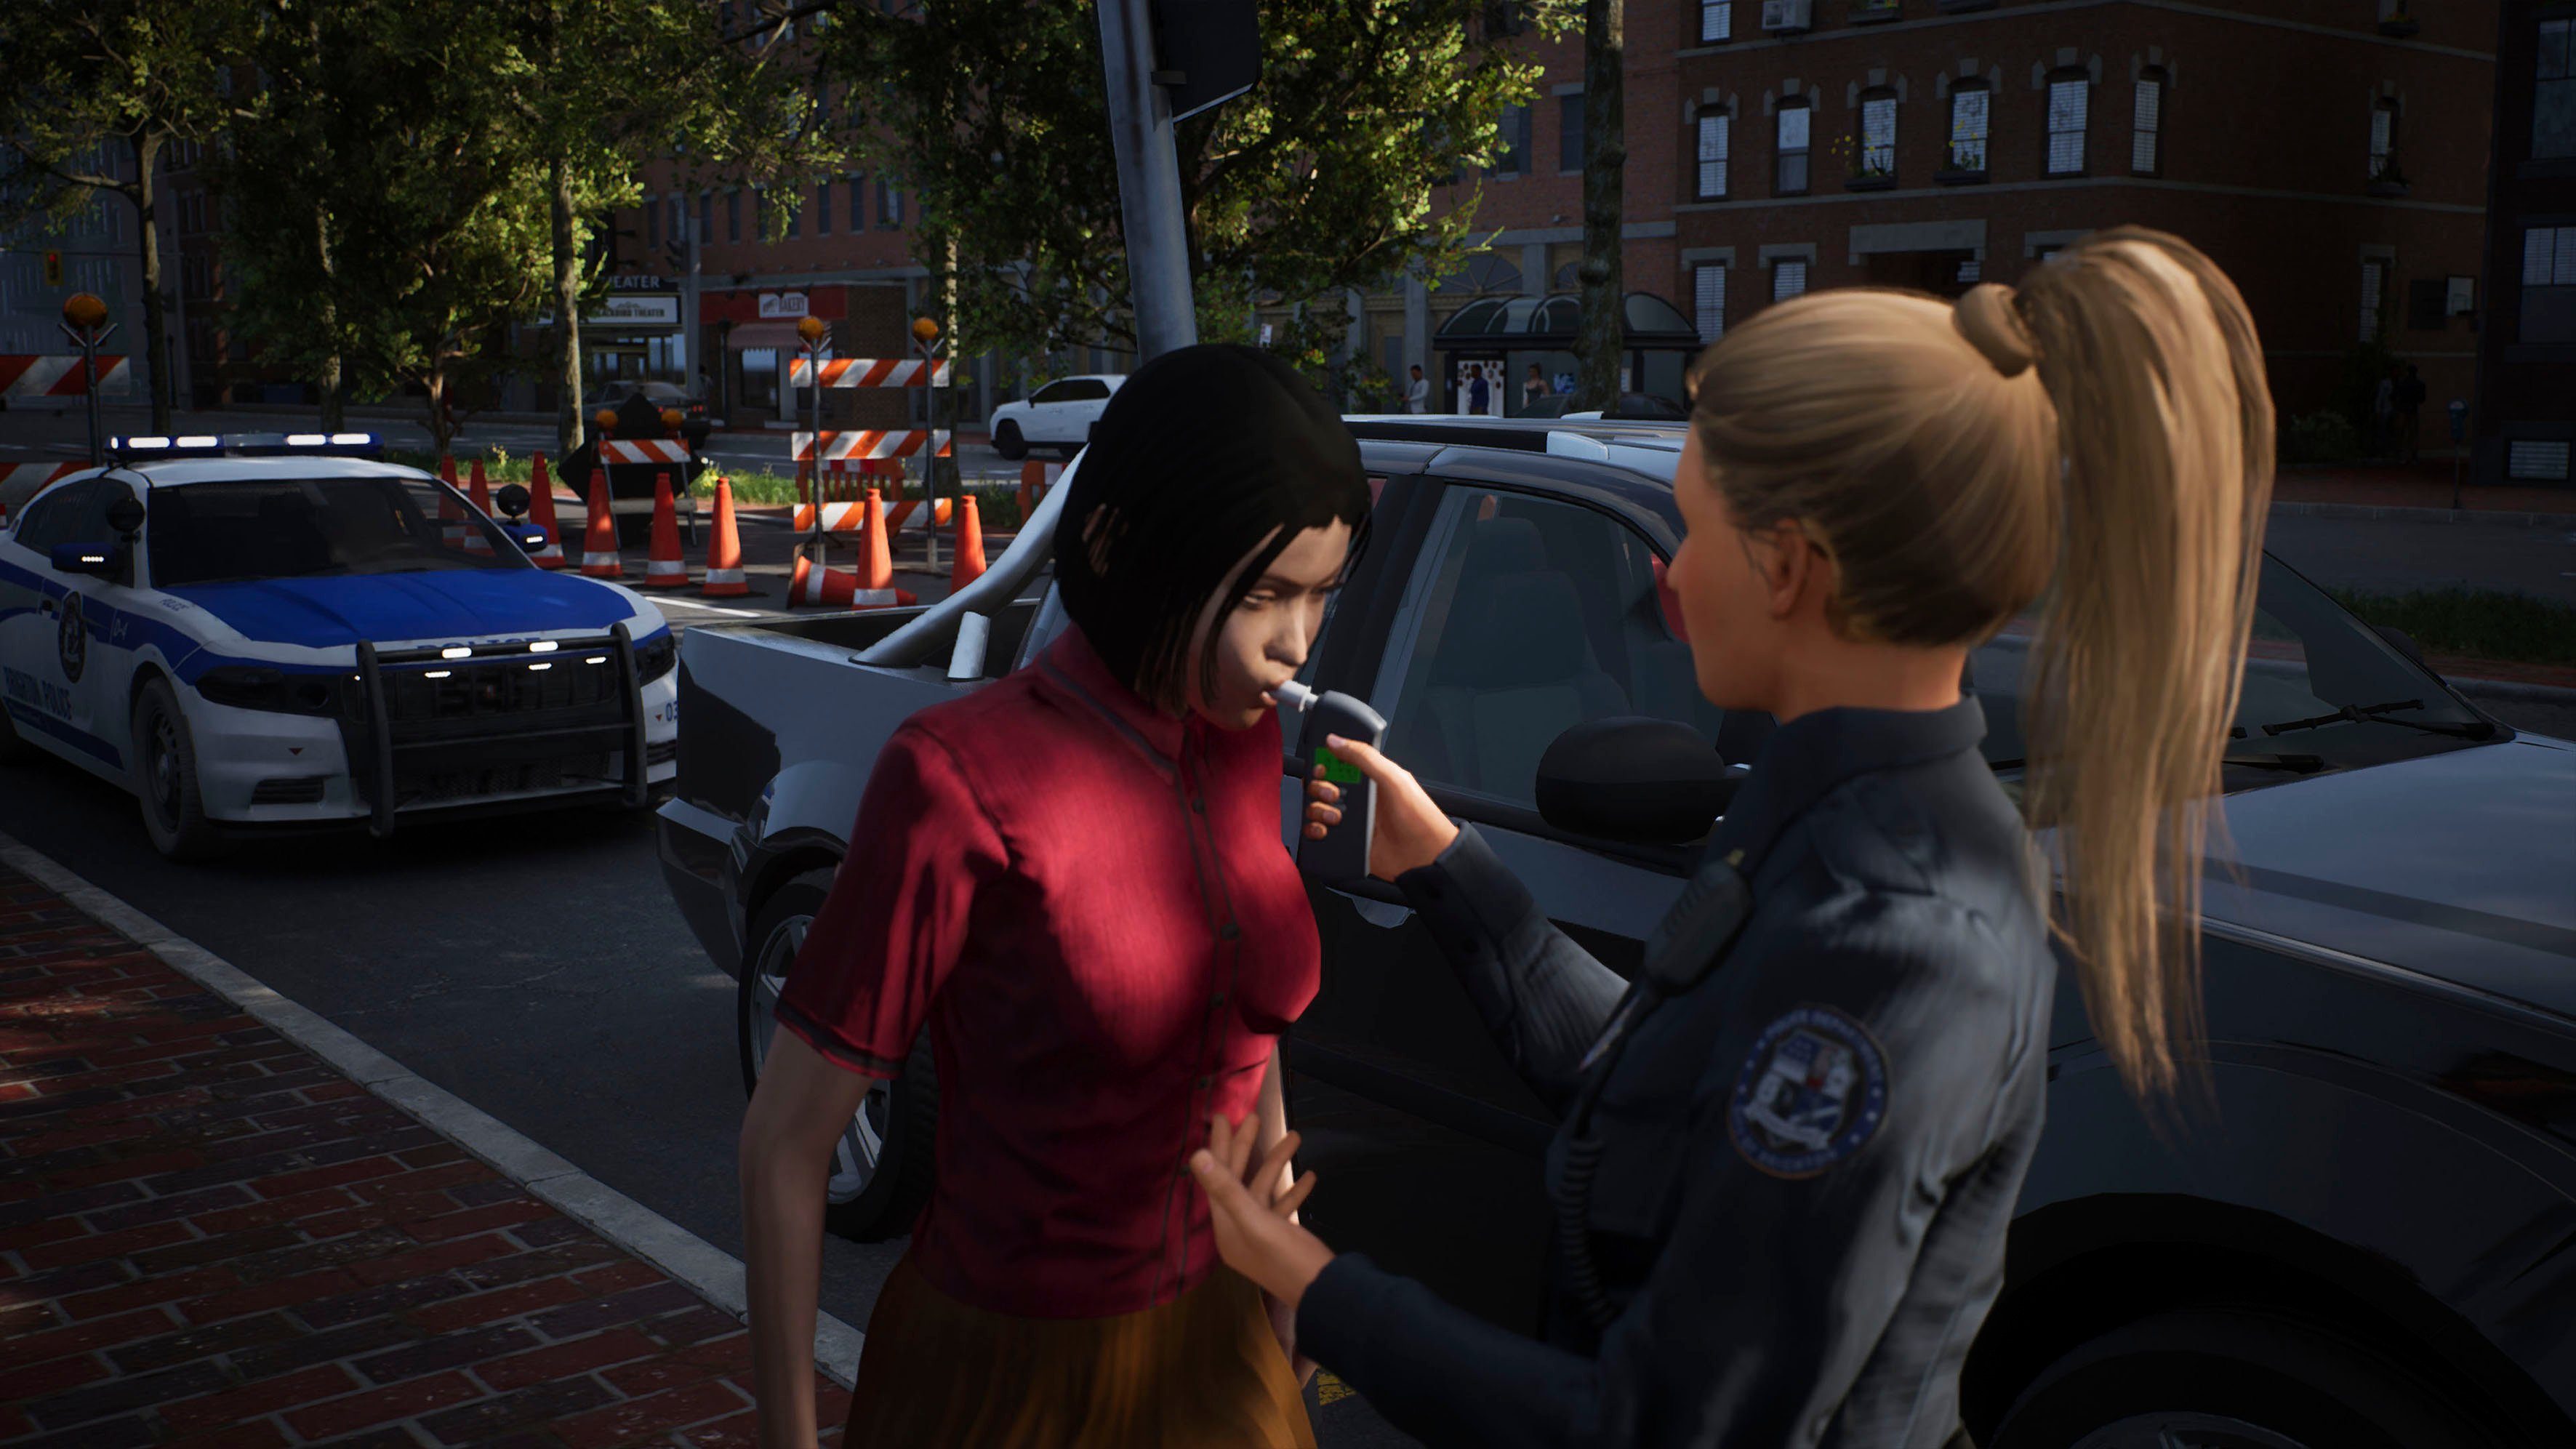 Patrol Officers Simulator: Police PlayStation 4 Astragon